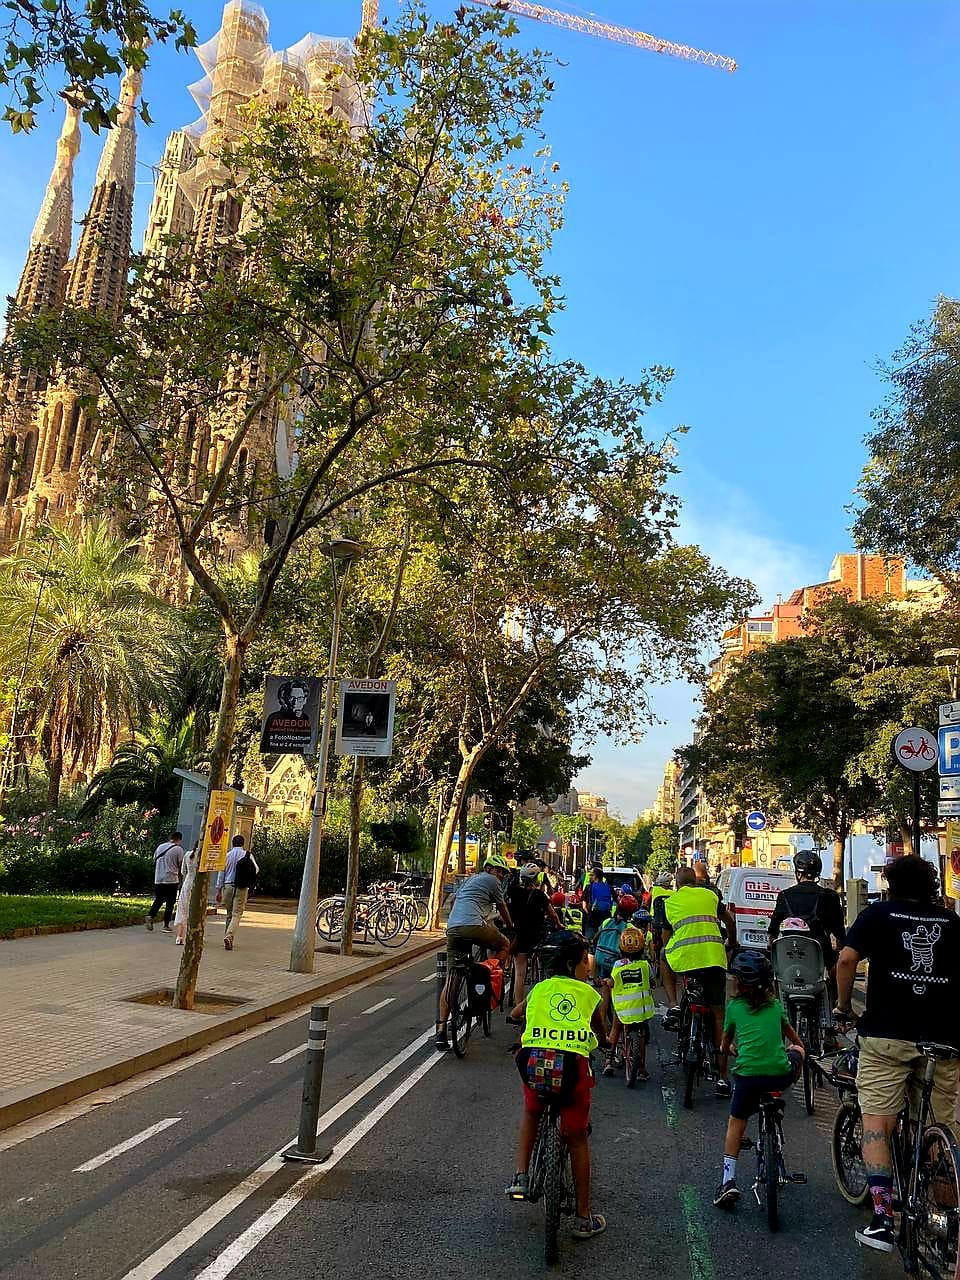 Bici Bus Βαρκελώνης, στο σχολείο με ποδήλατα [Συνέντευξη με 2 διοργανωτές]  | ΠοδηλΑΤΤΙΚΗ Κοινότητα